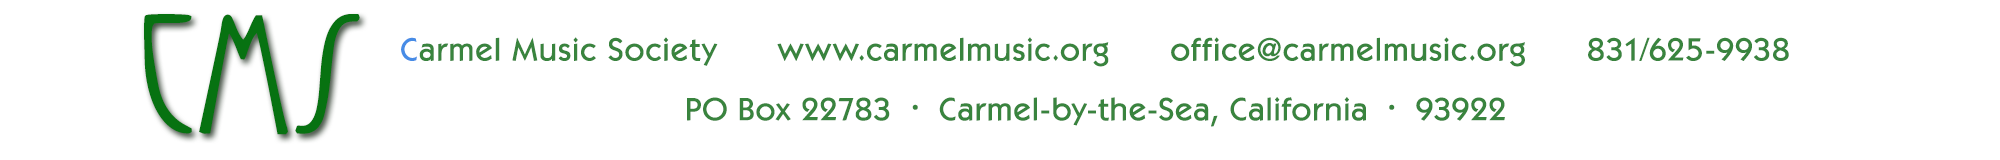 Carmel Music Society